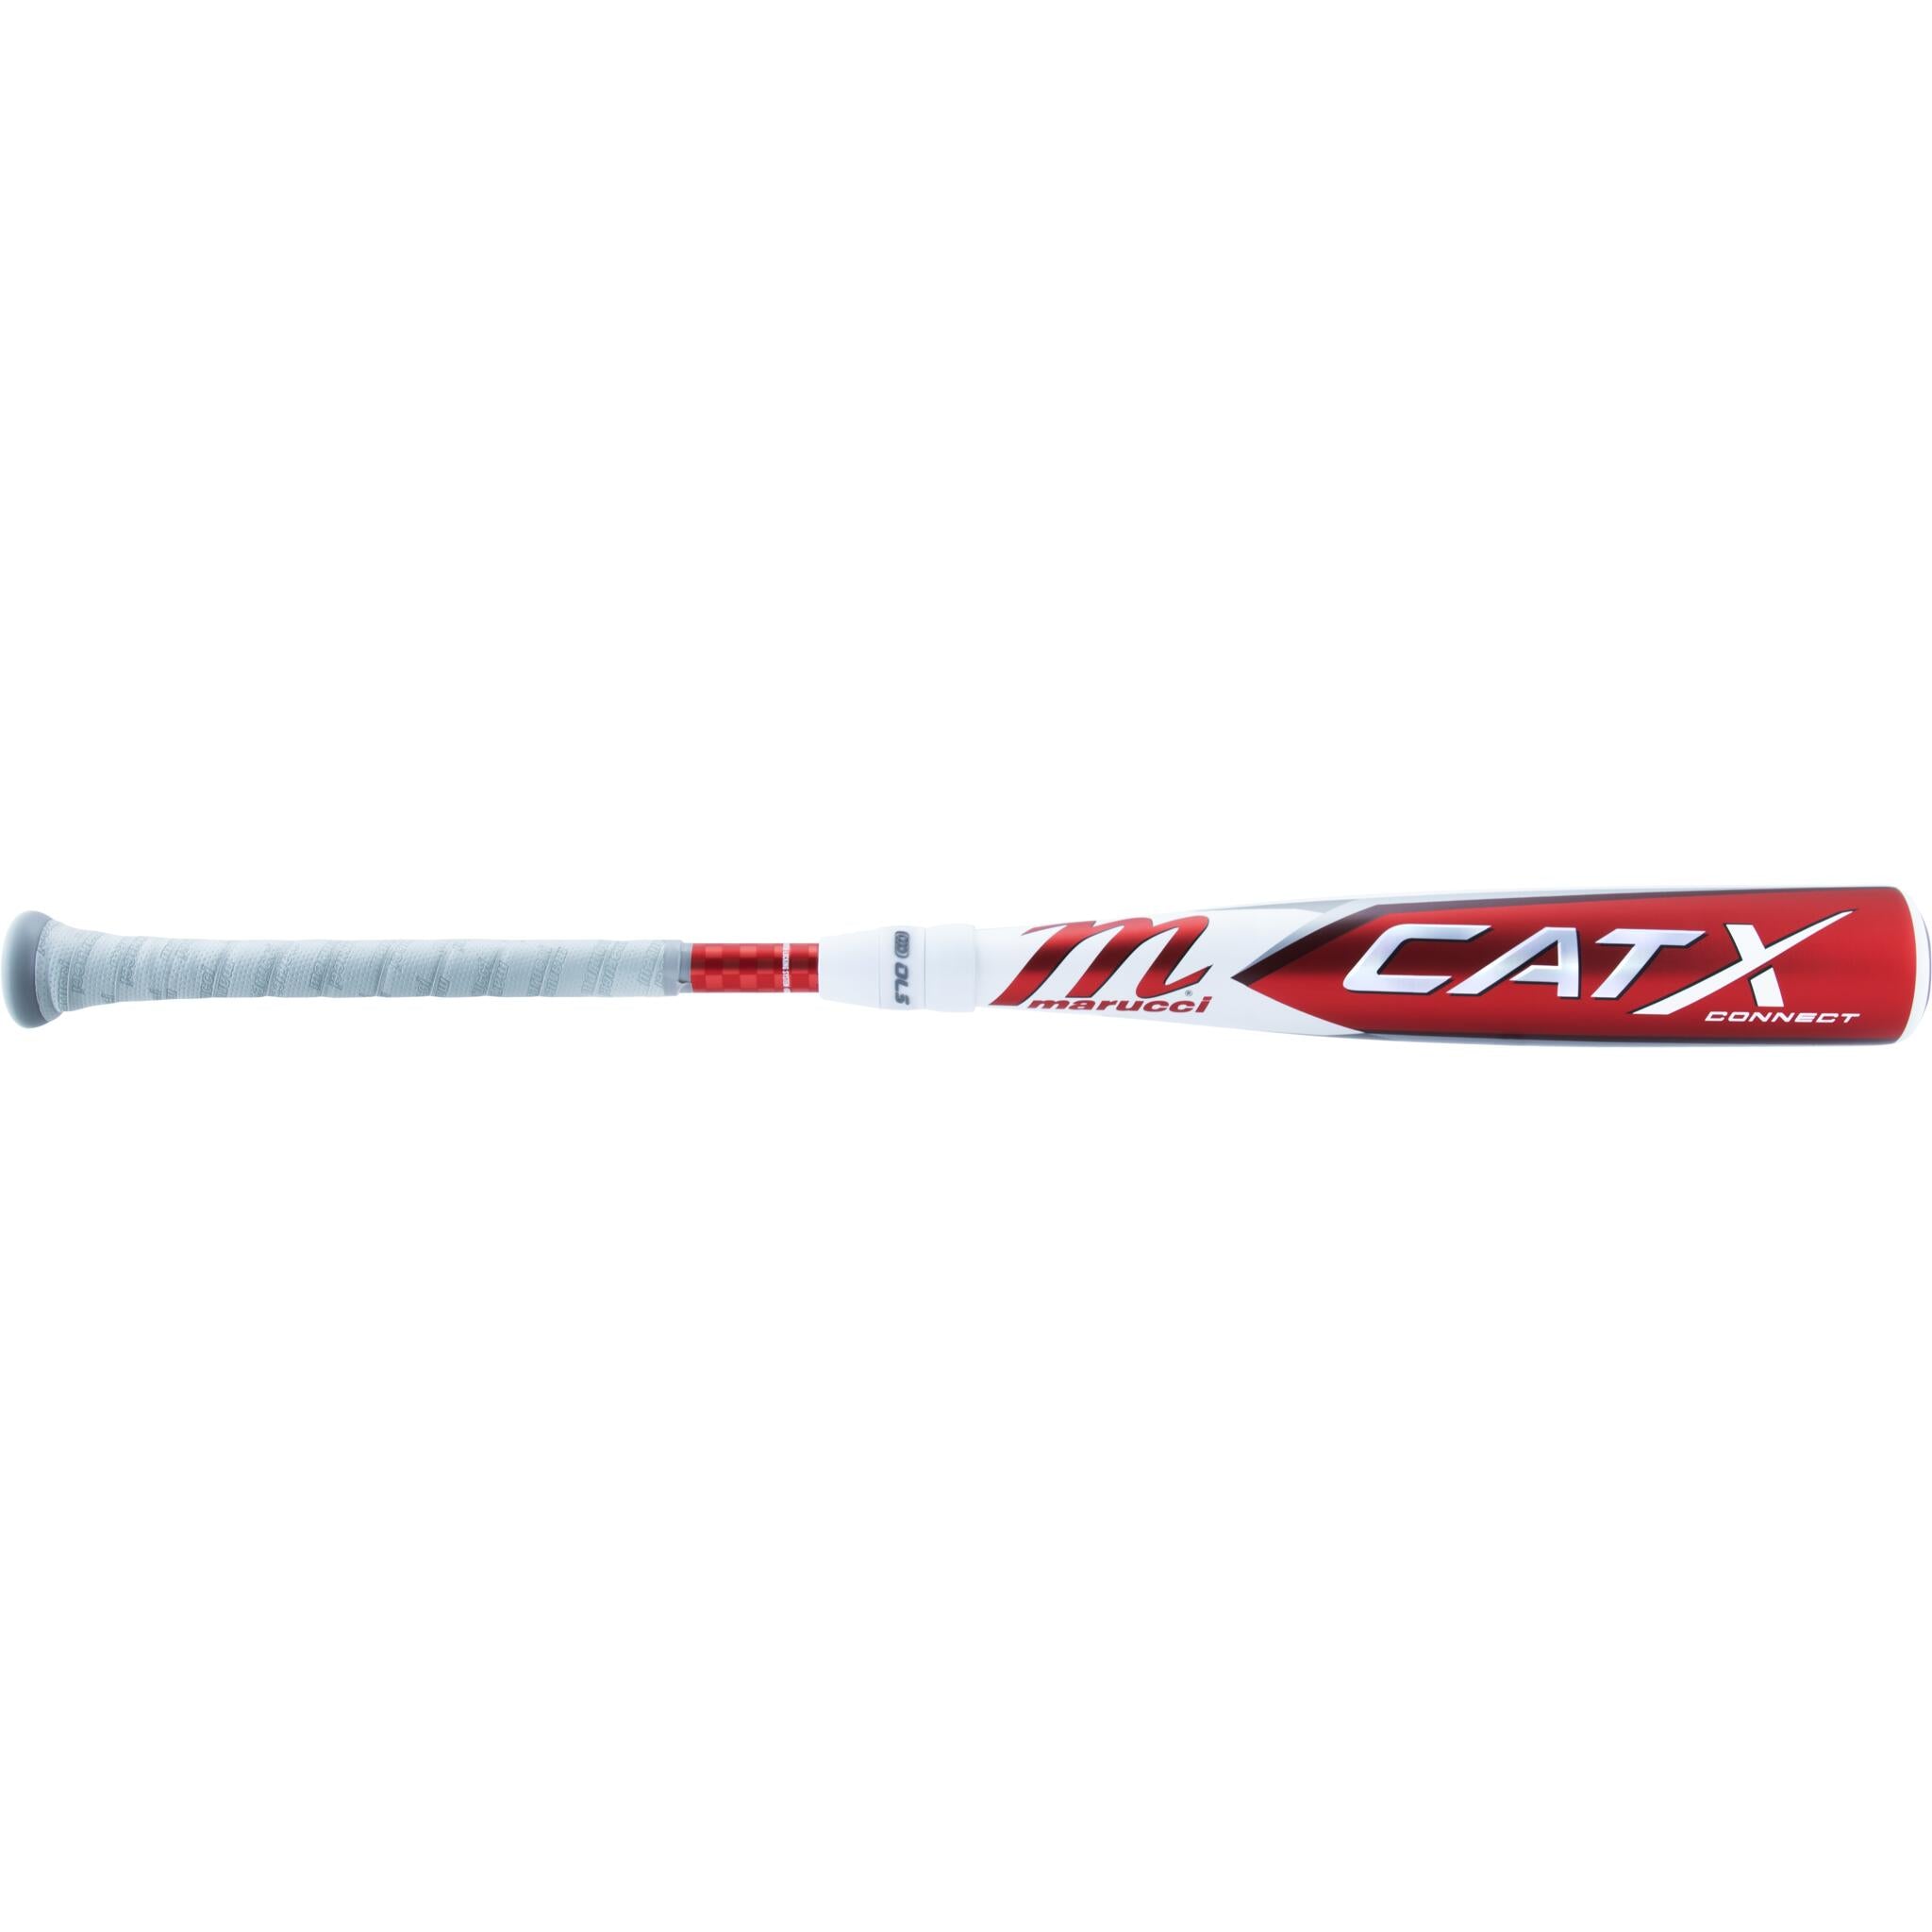 MARUCCI MSBCCX5 CATX Connect 2 3/4 Barrel USSSA Baseball Bat (-5)